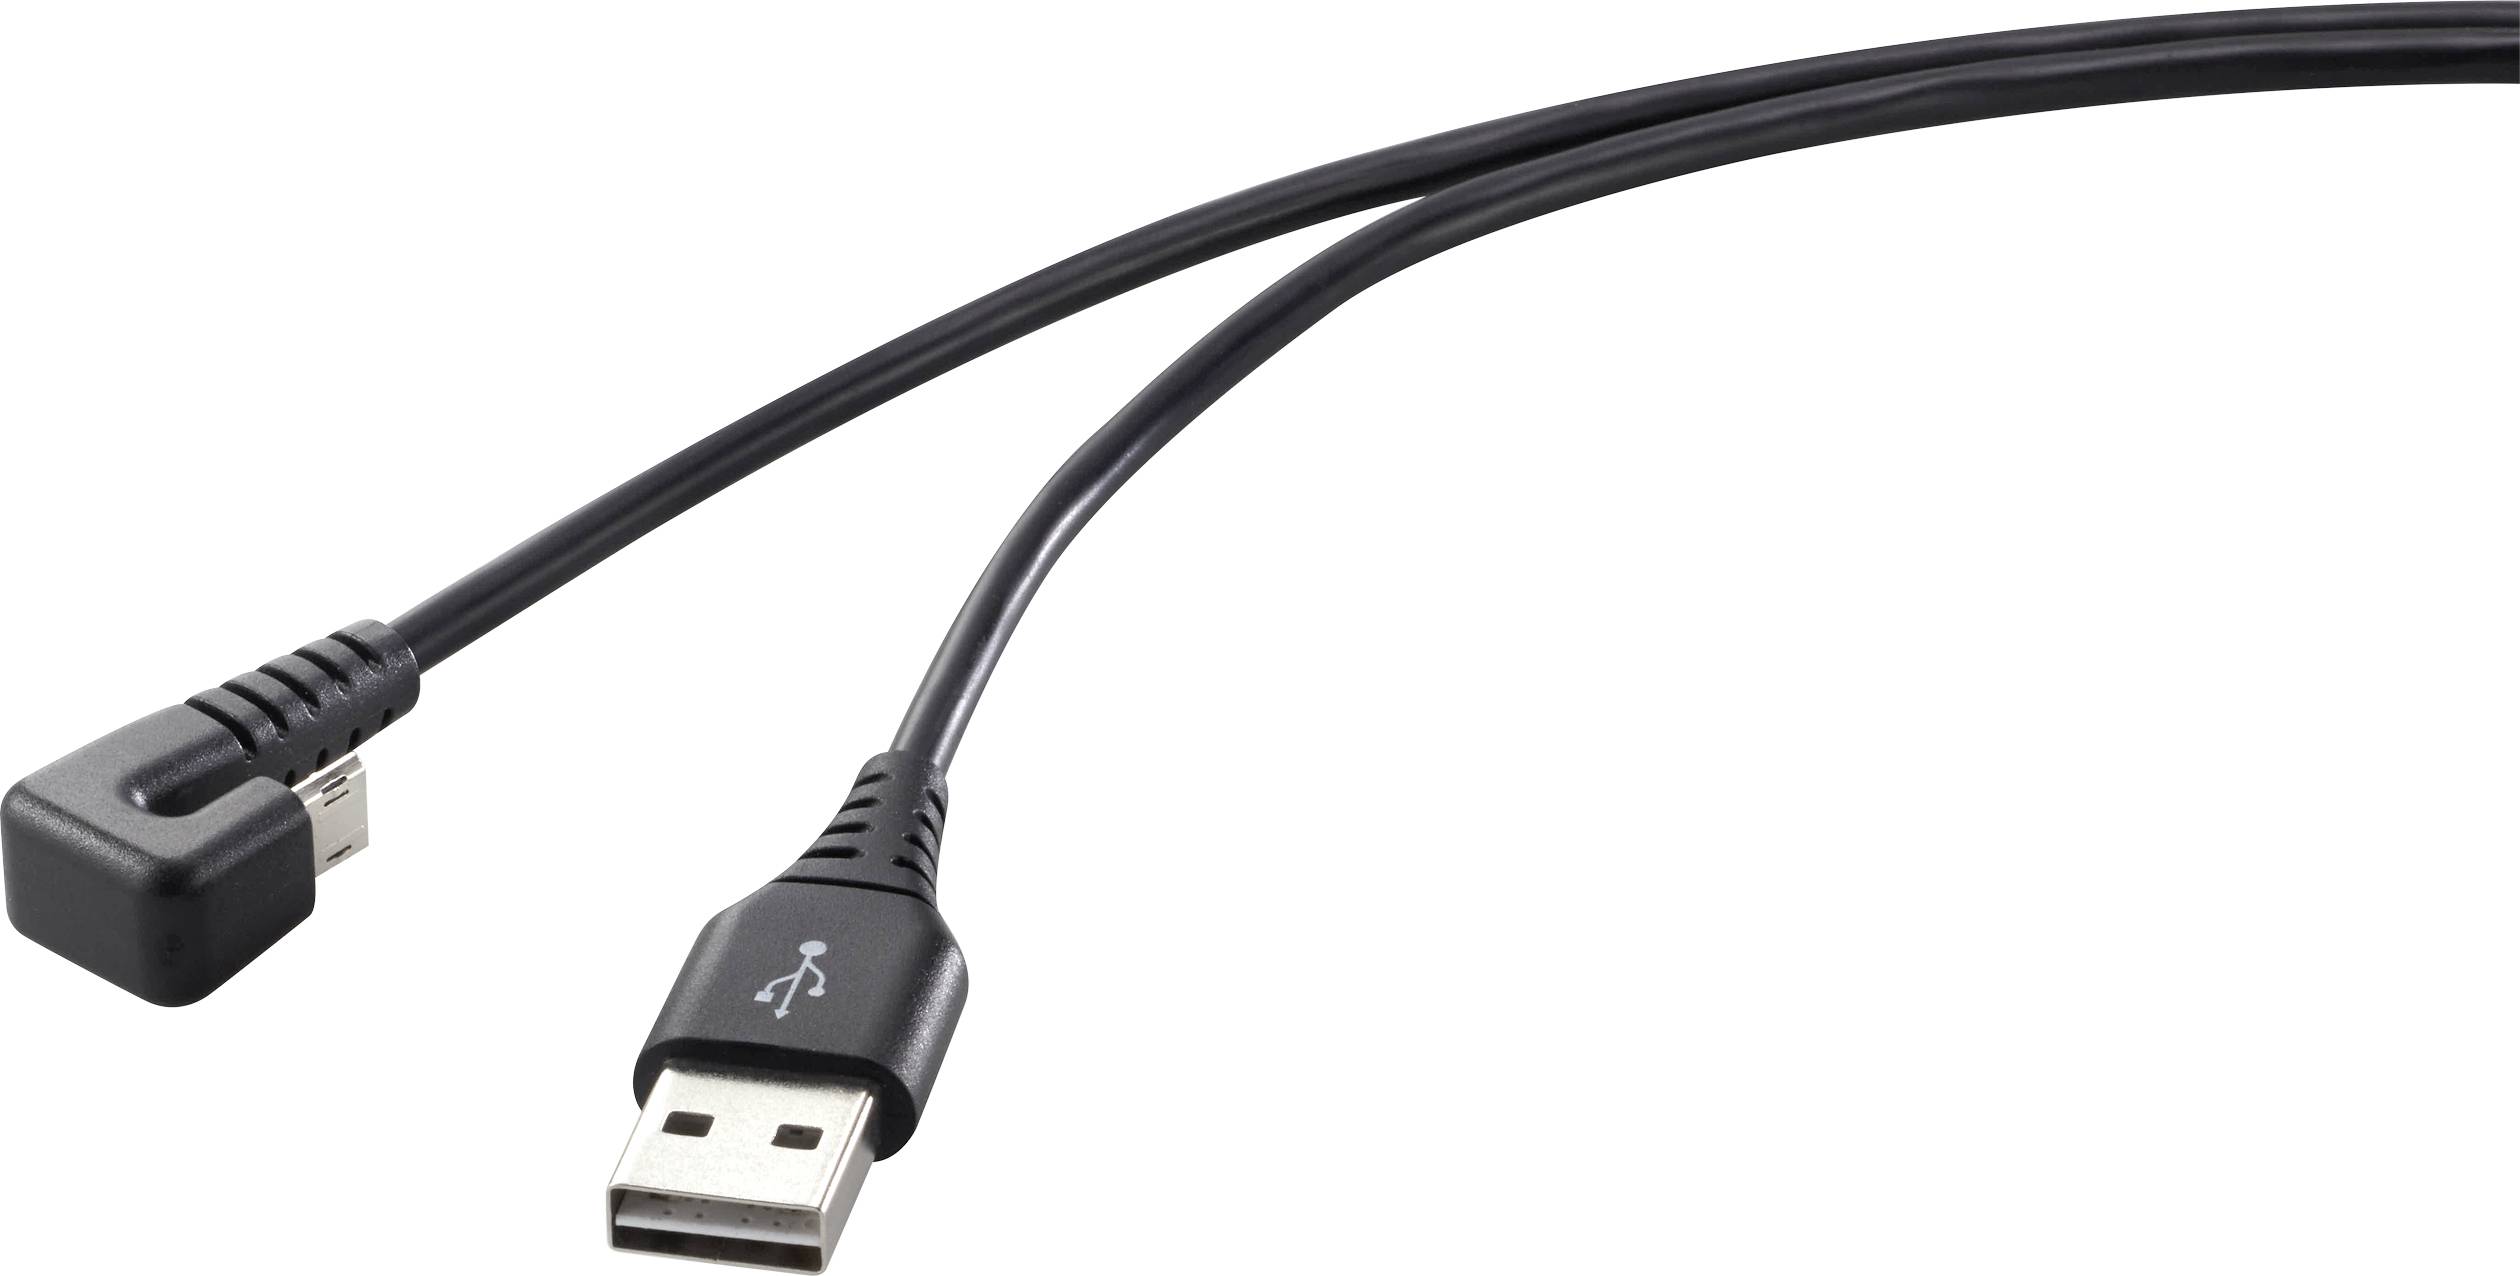 CONRAD Renkforce USB 2.0, Telefon (analog) Anschlusskabel [1x USB 2.0 Stecker A - 1x USB 2.0 Buchse